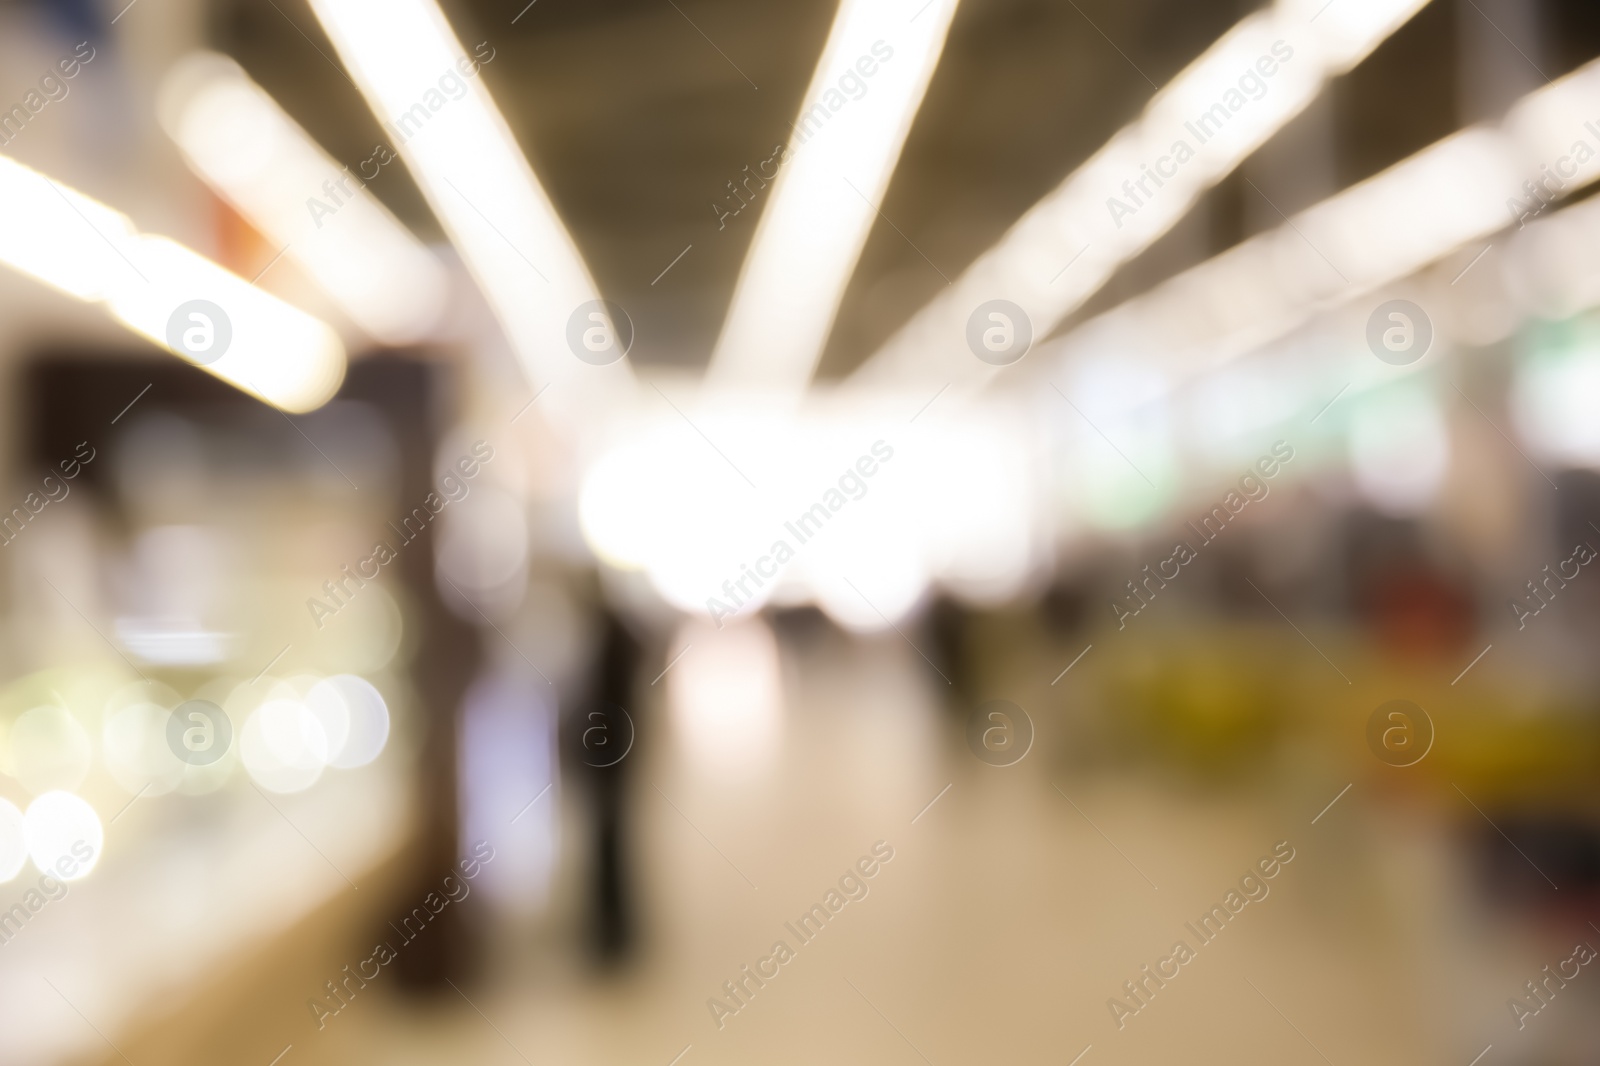 Photo of Blurred view of modern supermarket interior